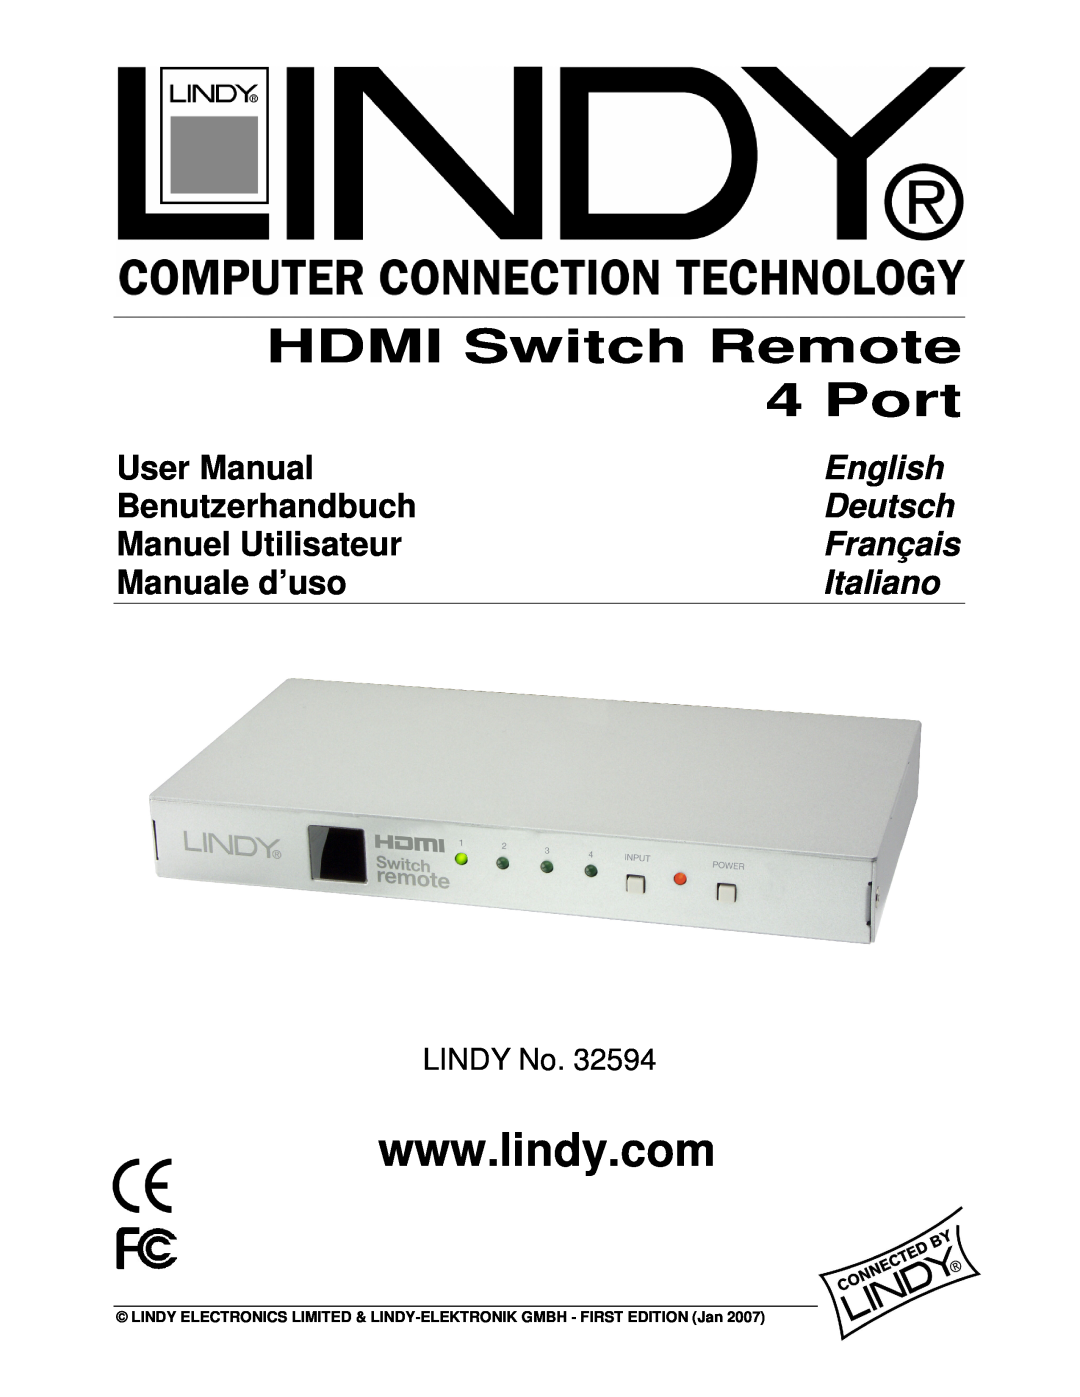 Lindy lindy no. 32594 user manual HDMI Switch Remote 4 Port, User Manual, English, Benutzerhandbuch, Deutsch, Français 